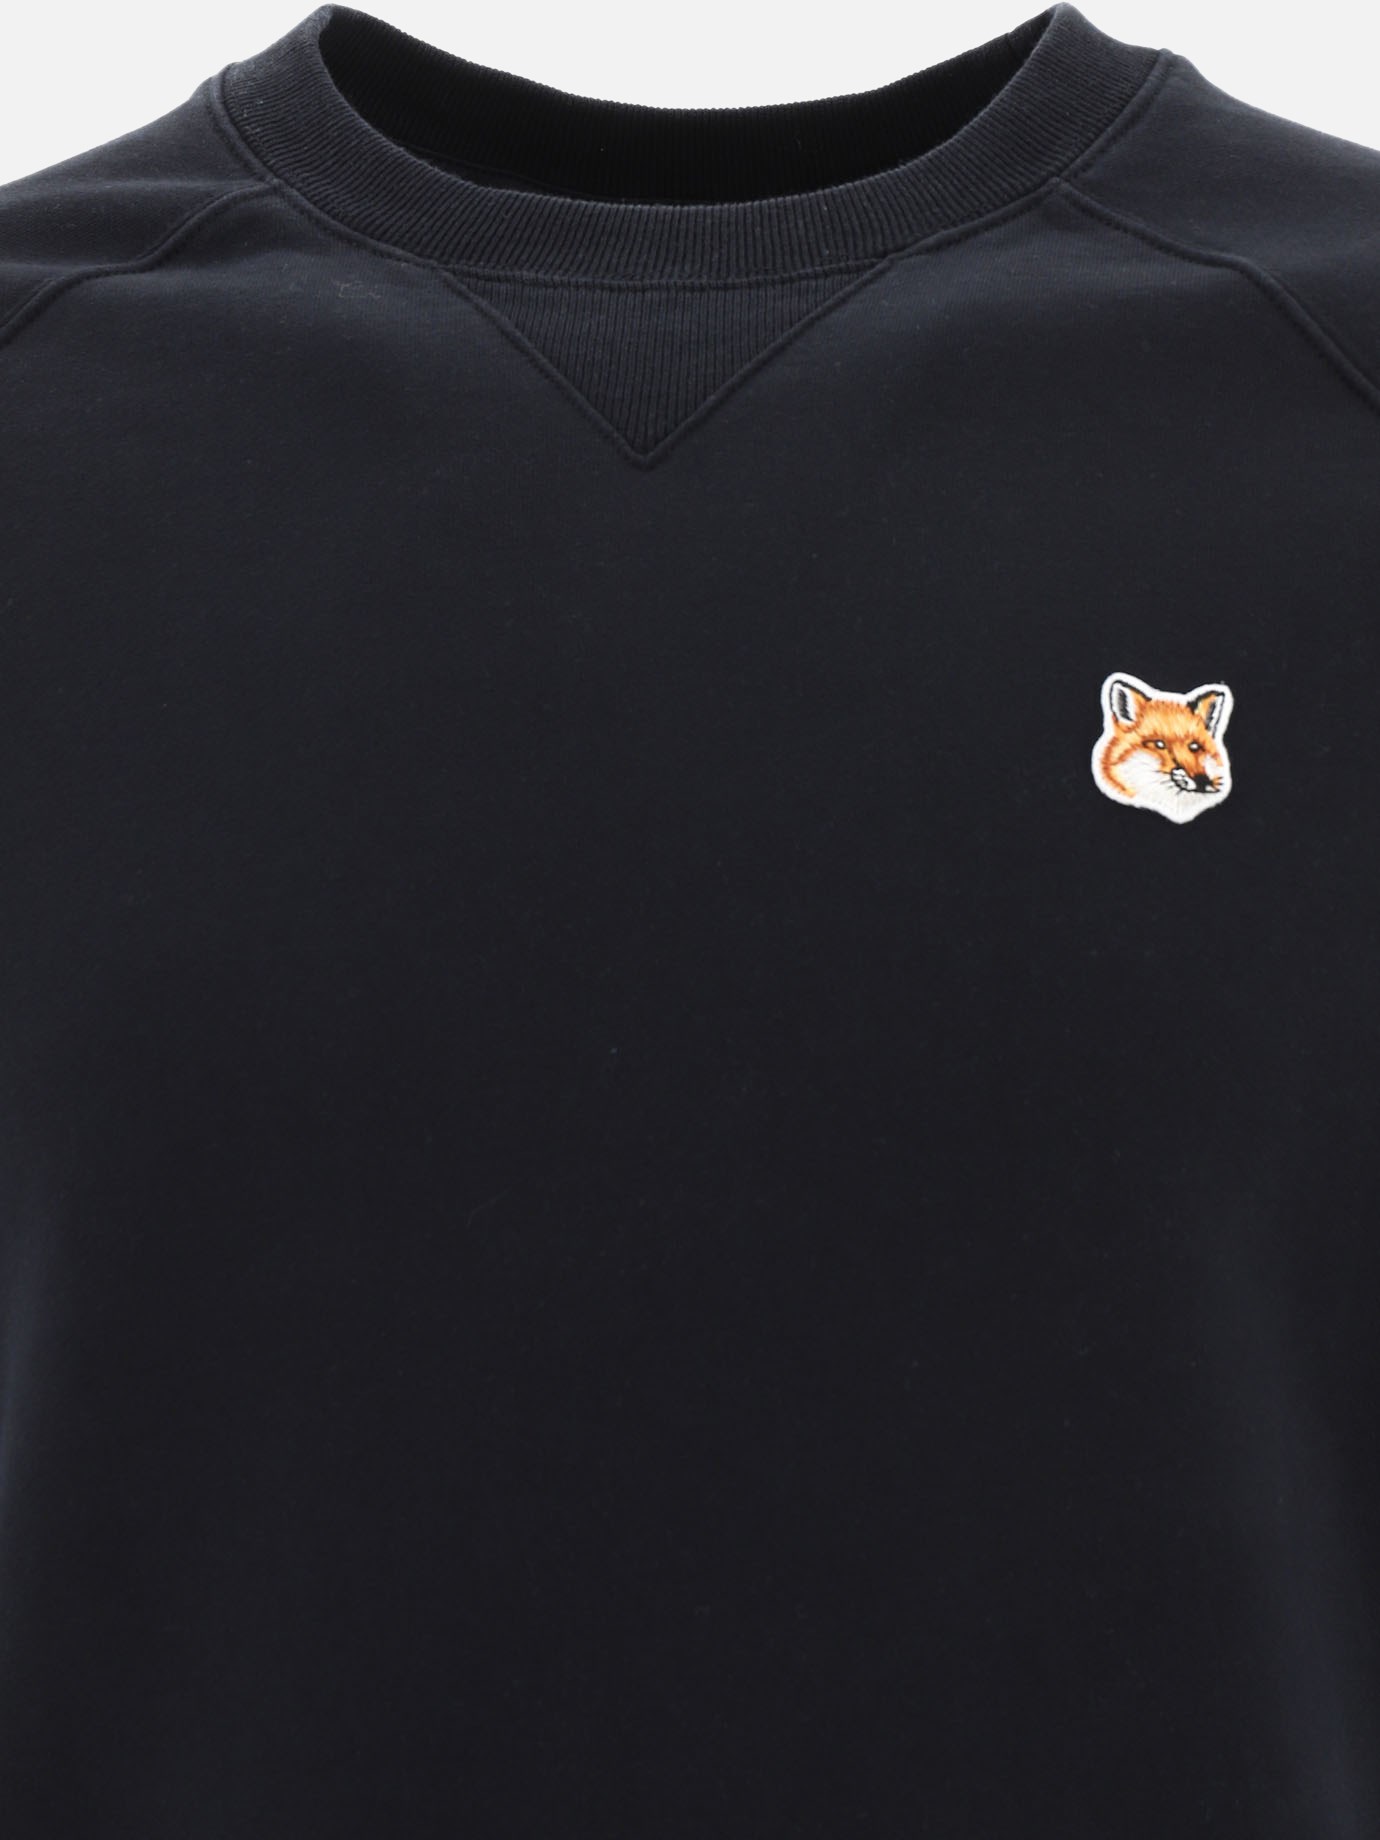  Fox Head  sweatshirt by Maison Kitsuné